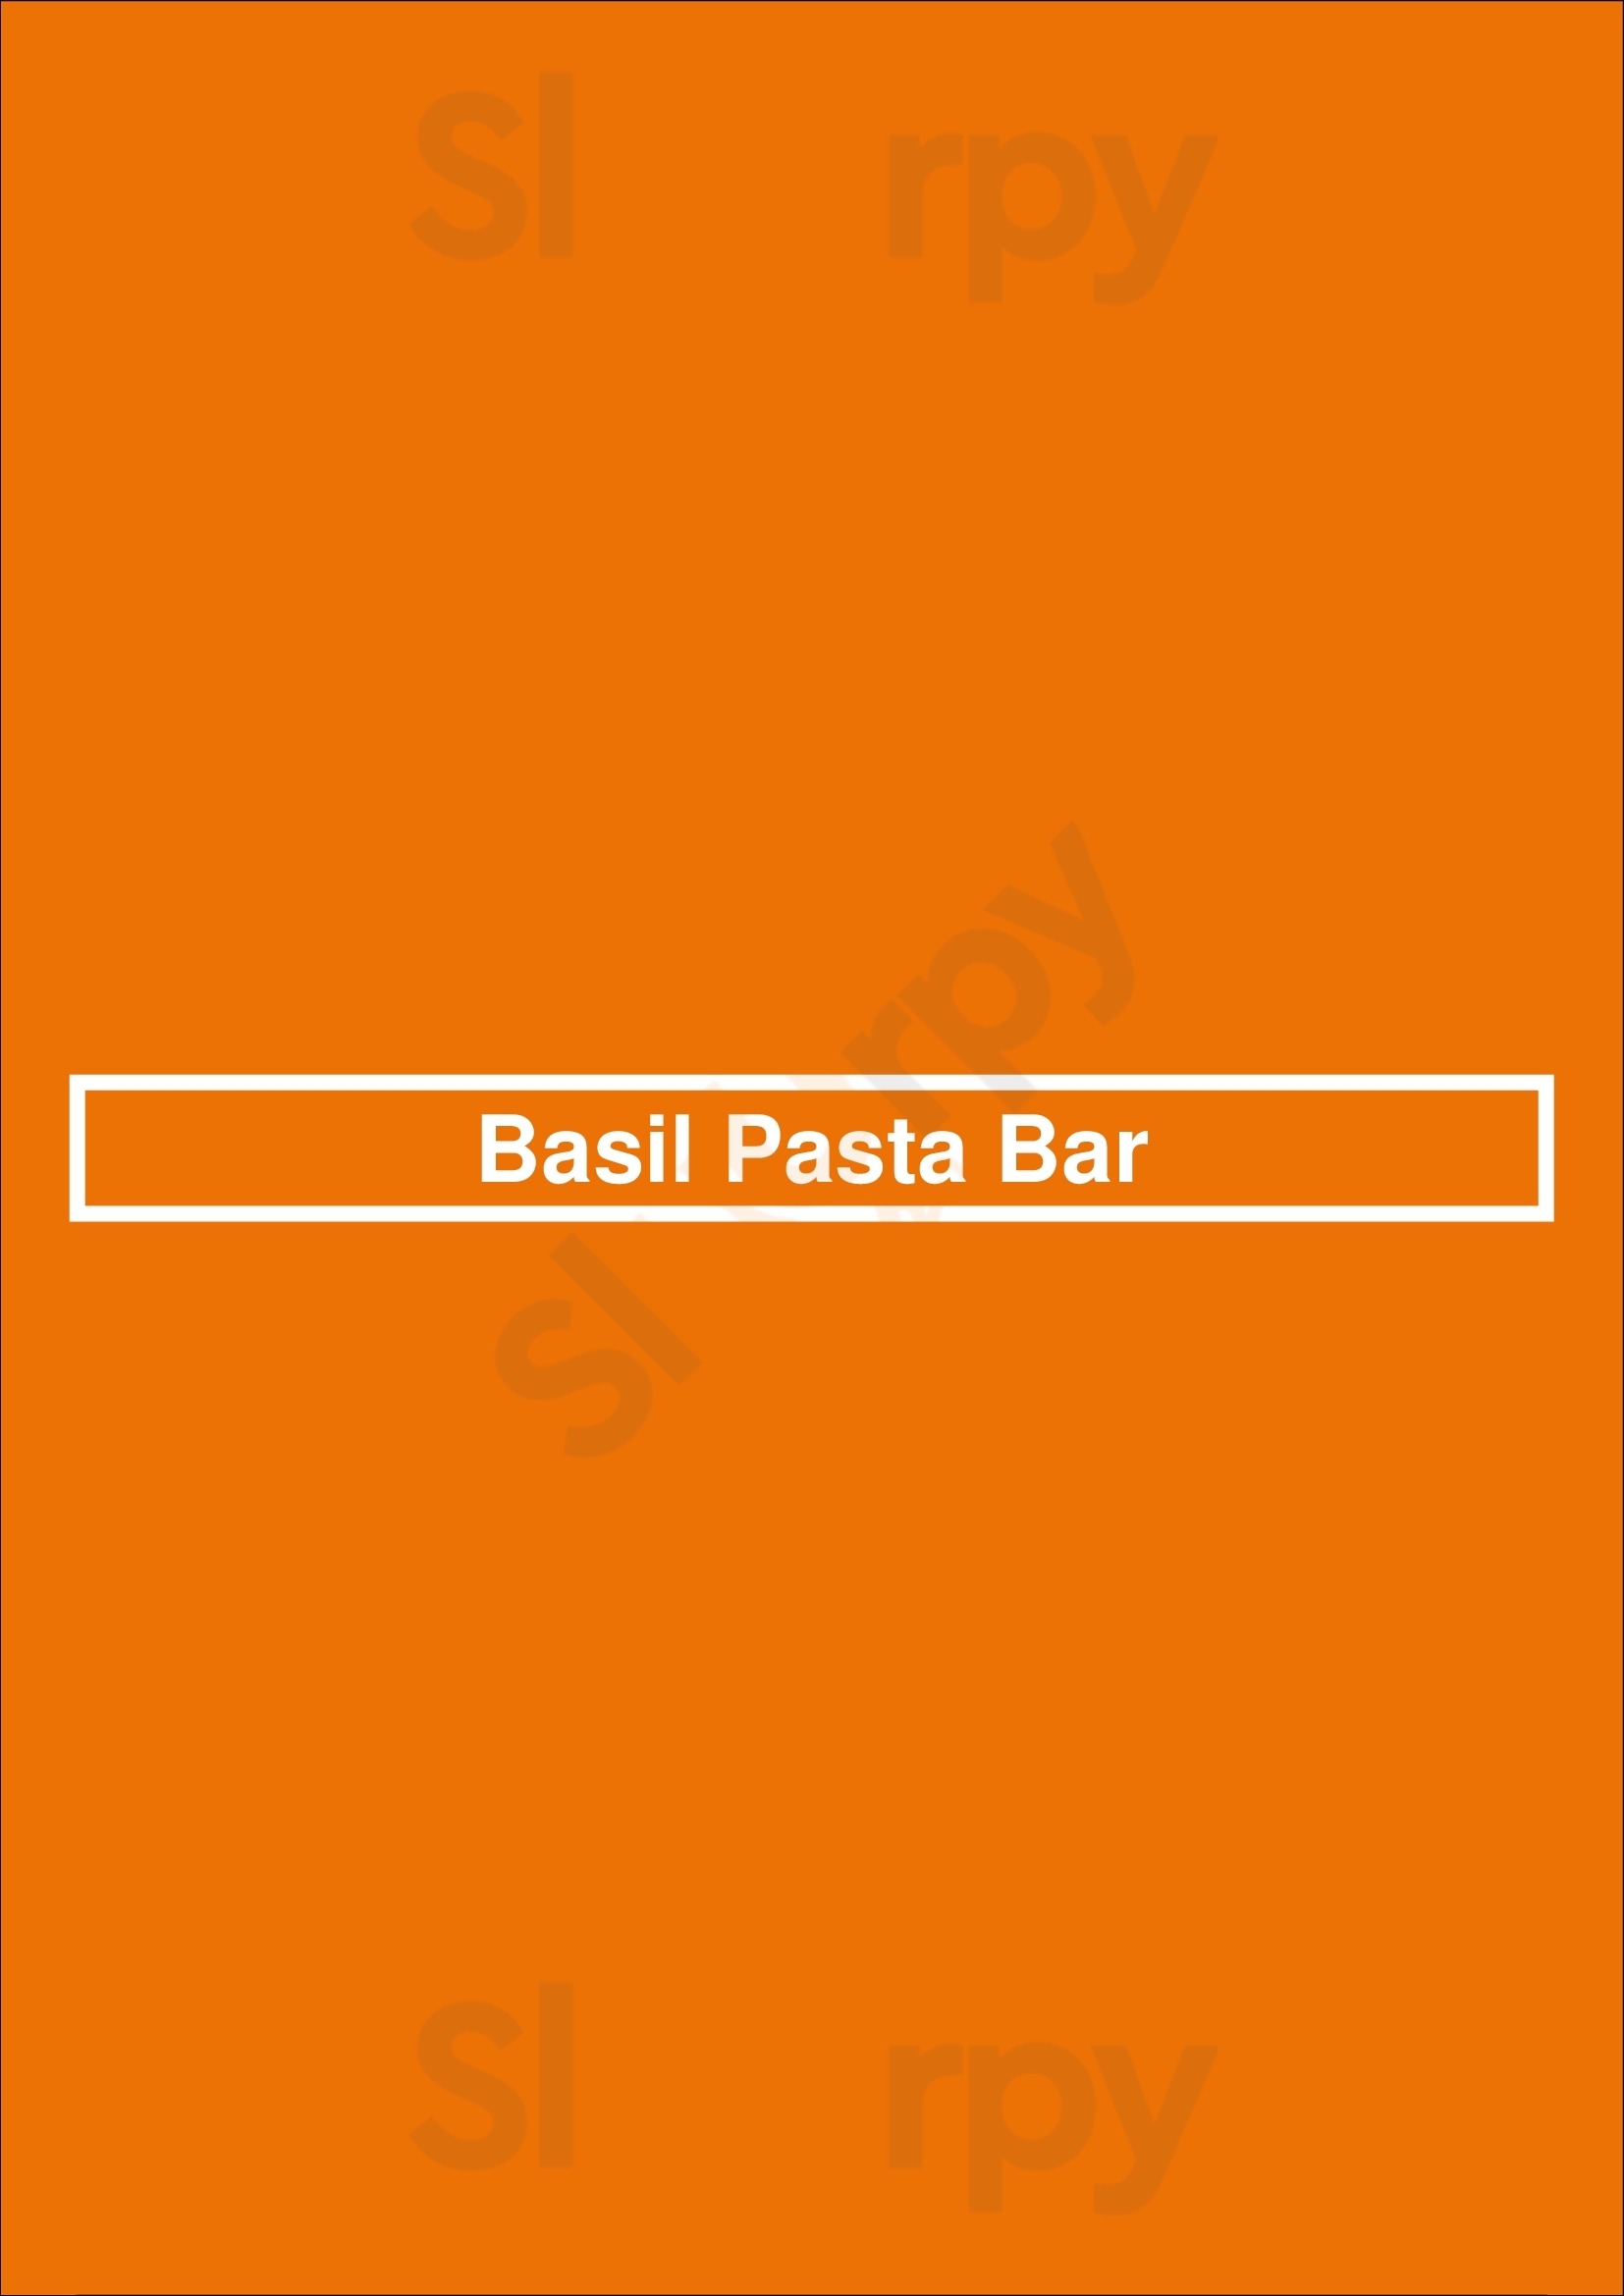 Basil Pasta Bar Vancouver Menu - 1